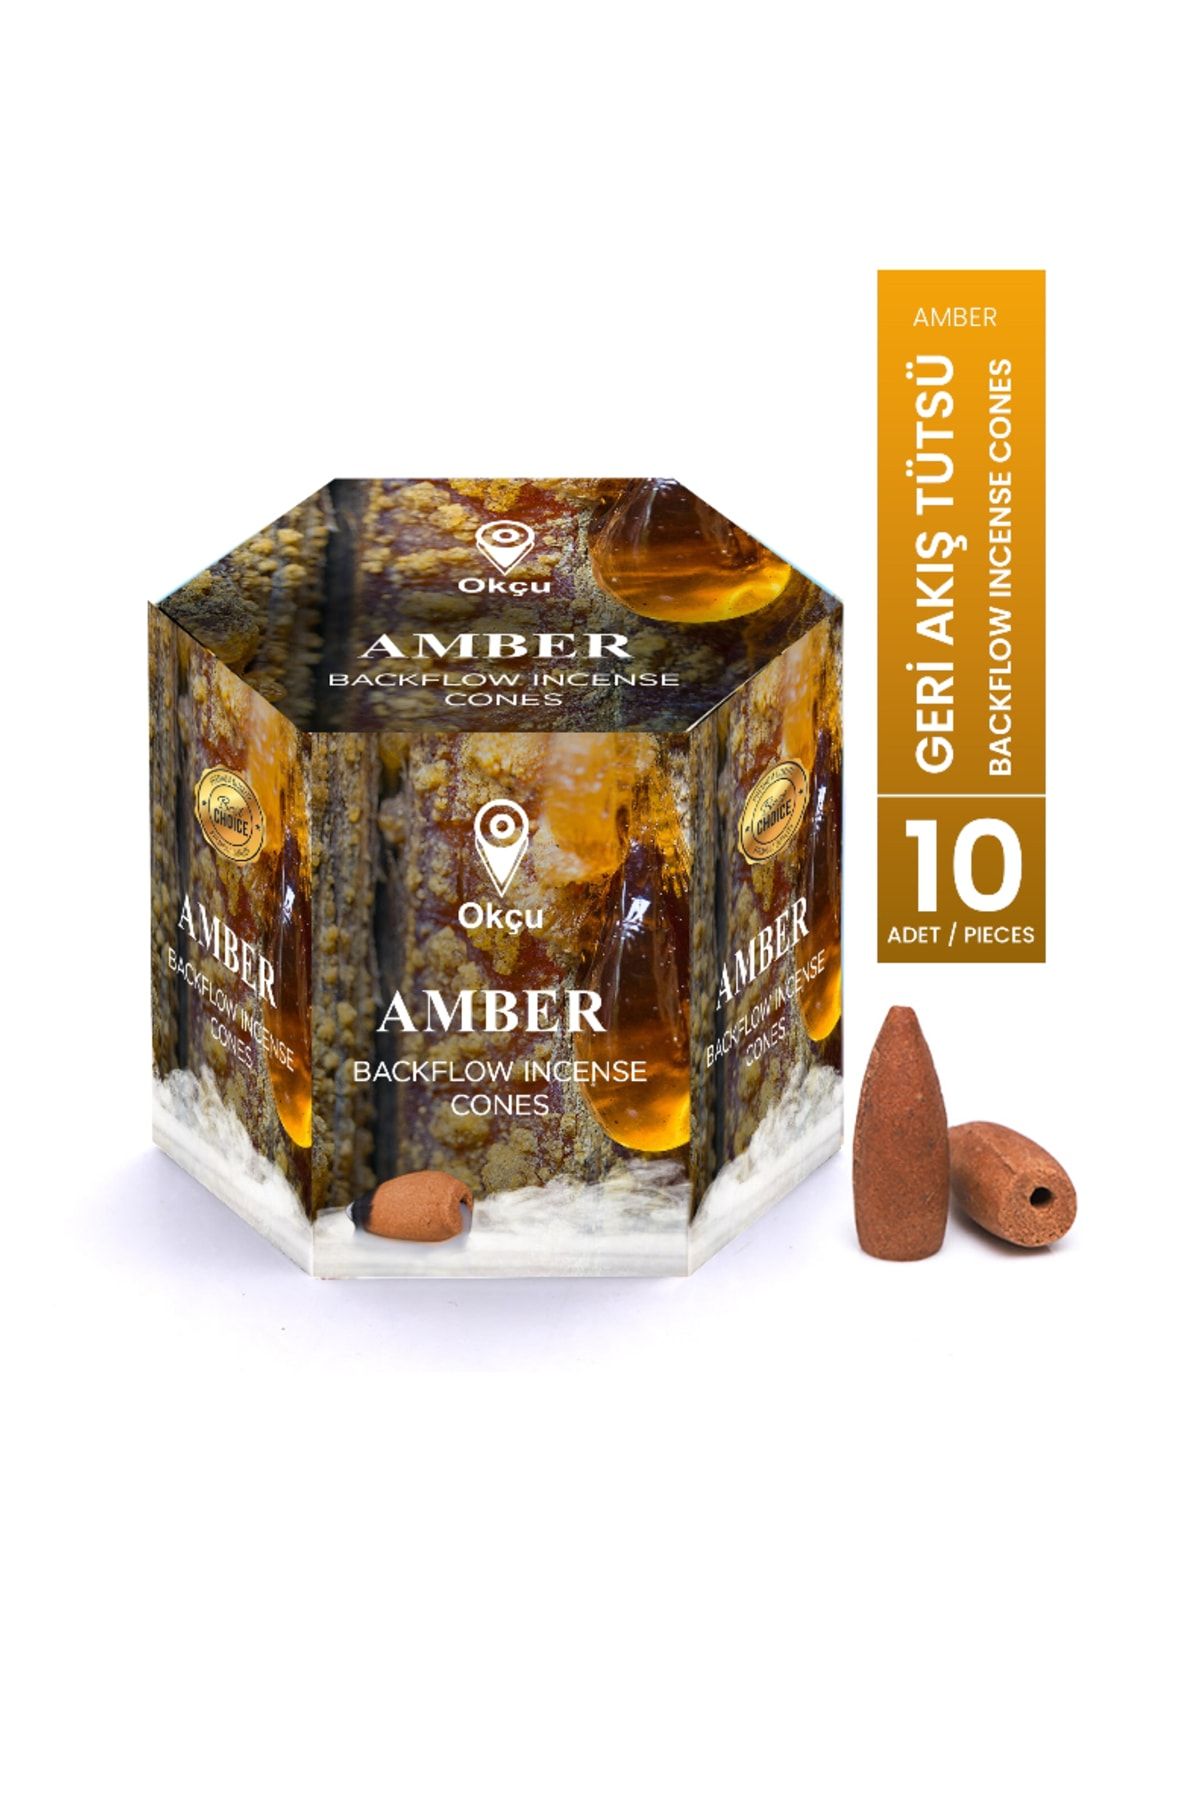 Okçu Amber Geri Akış Şelale Tütsü Konik Backflow Incense Cones 10 Adet/ Pieces